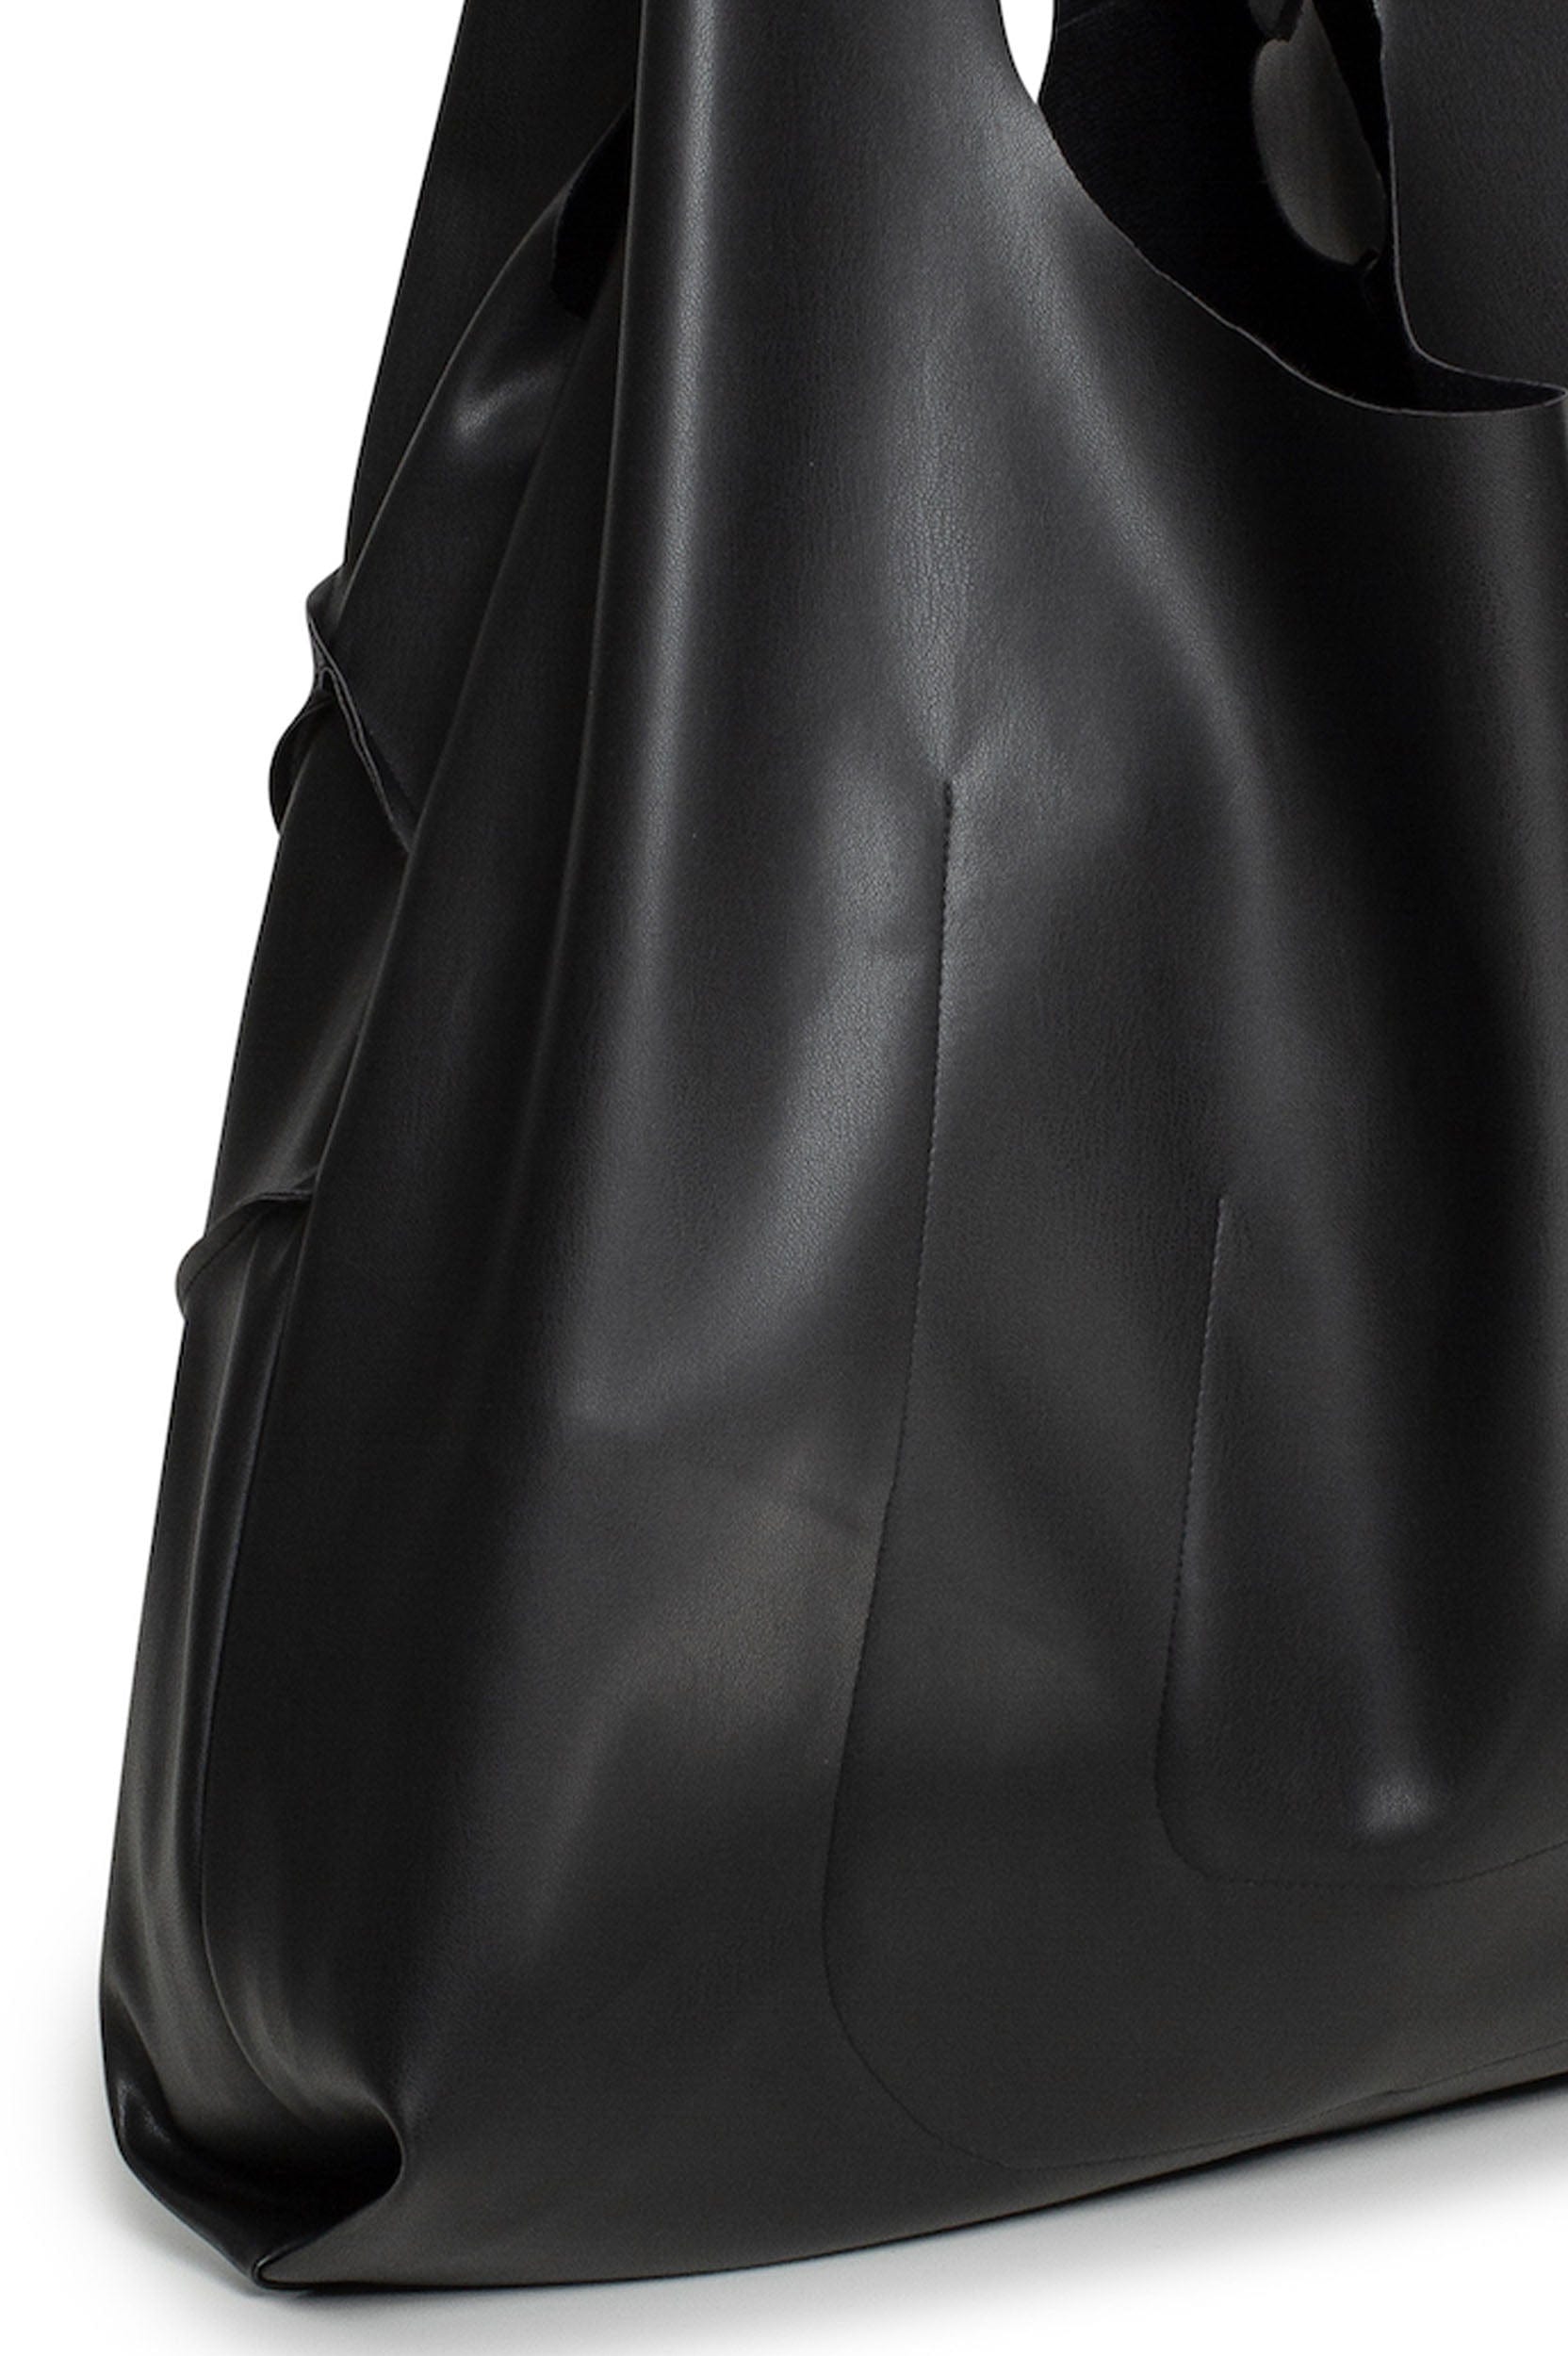 MDNT45 One size / Black Buntglas bag black